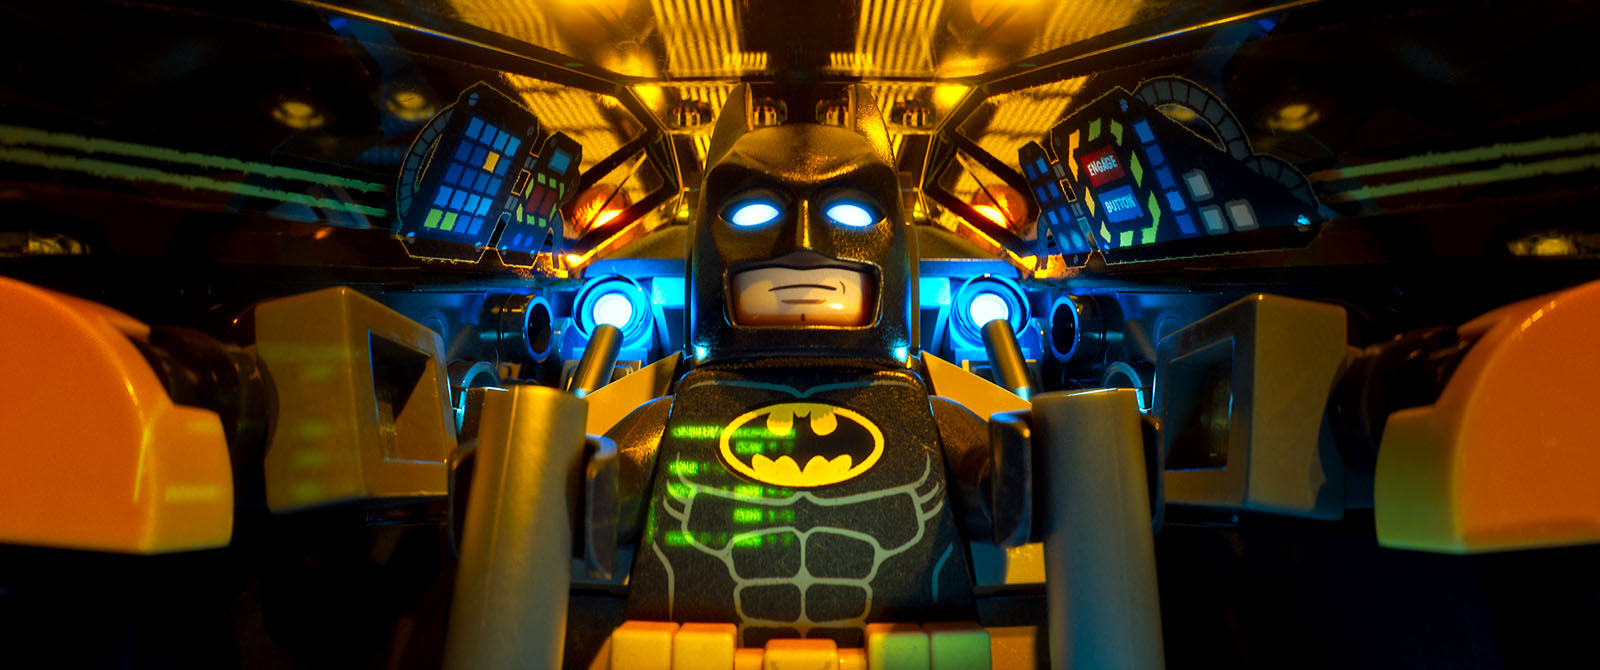 LEGO Batman O Filme-16Agosto2016-2